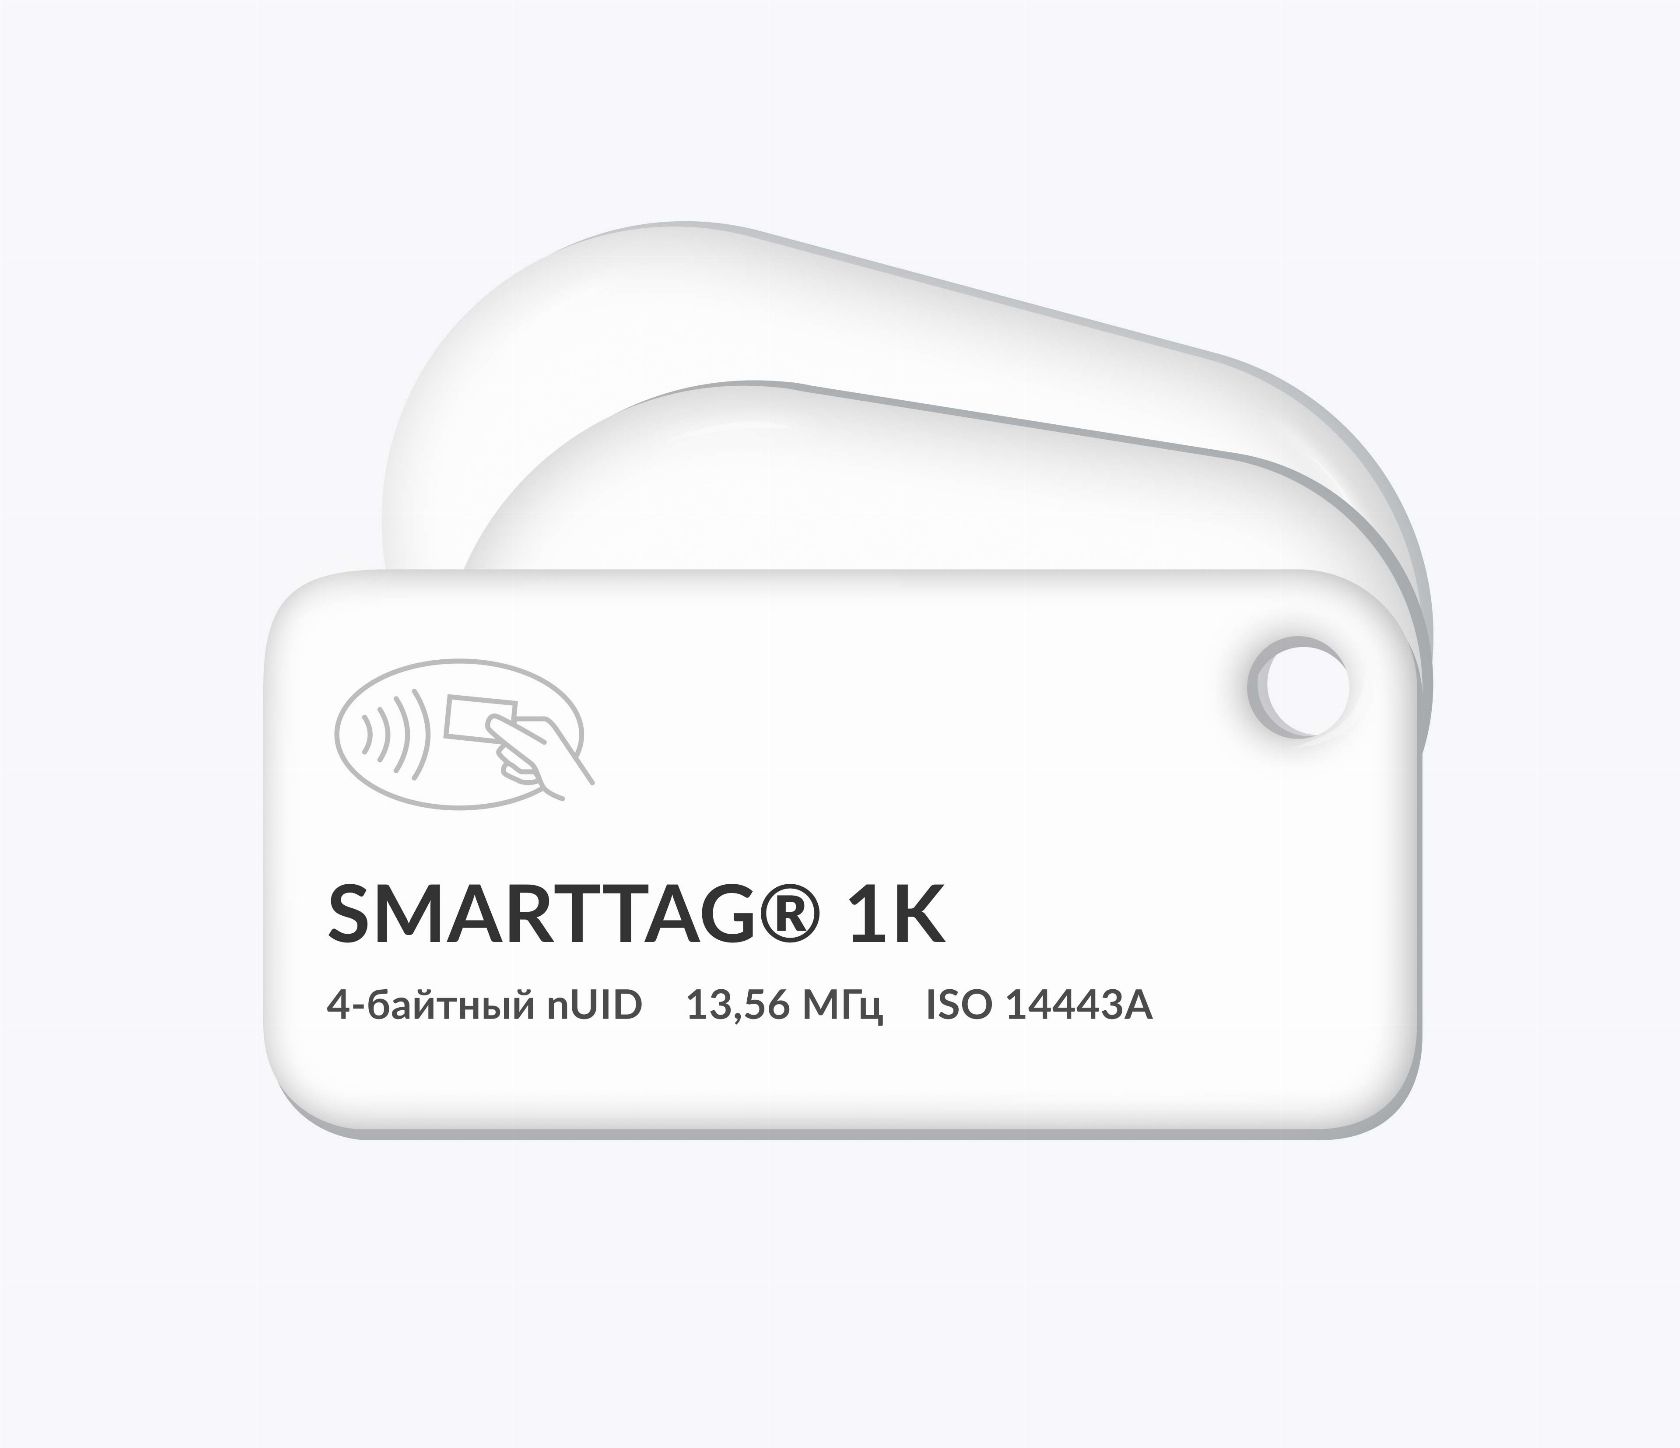 RFID-брелоки NEOKEY® с чипом SMARTTAG 1k 4 byte nUID и вашим логотипом